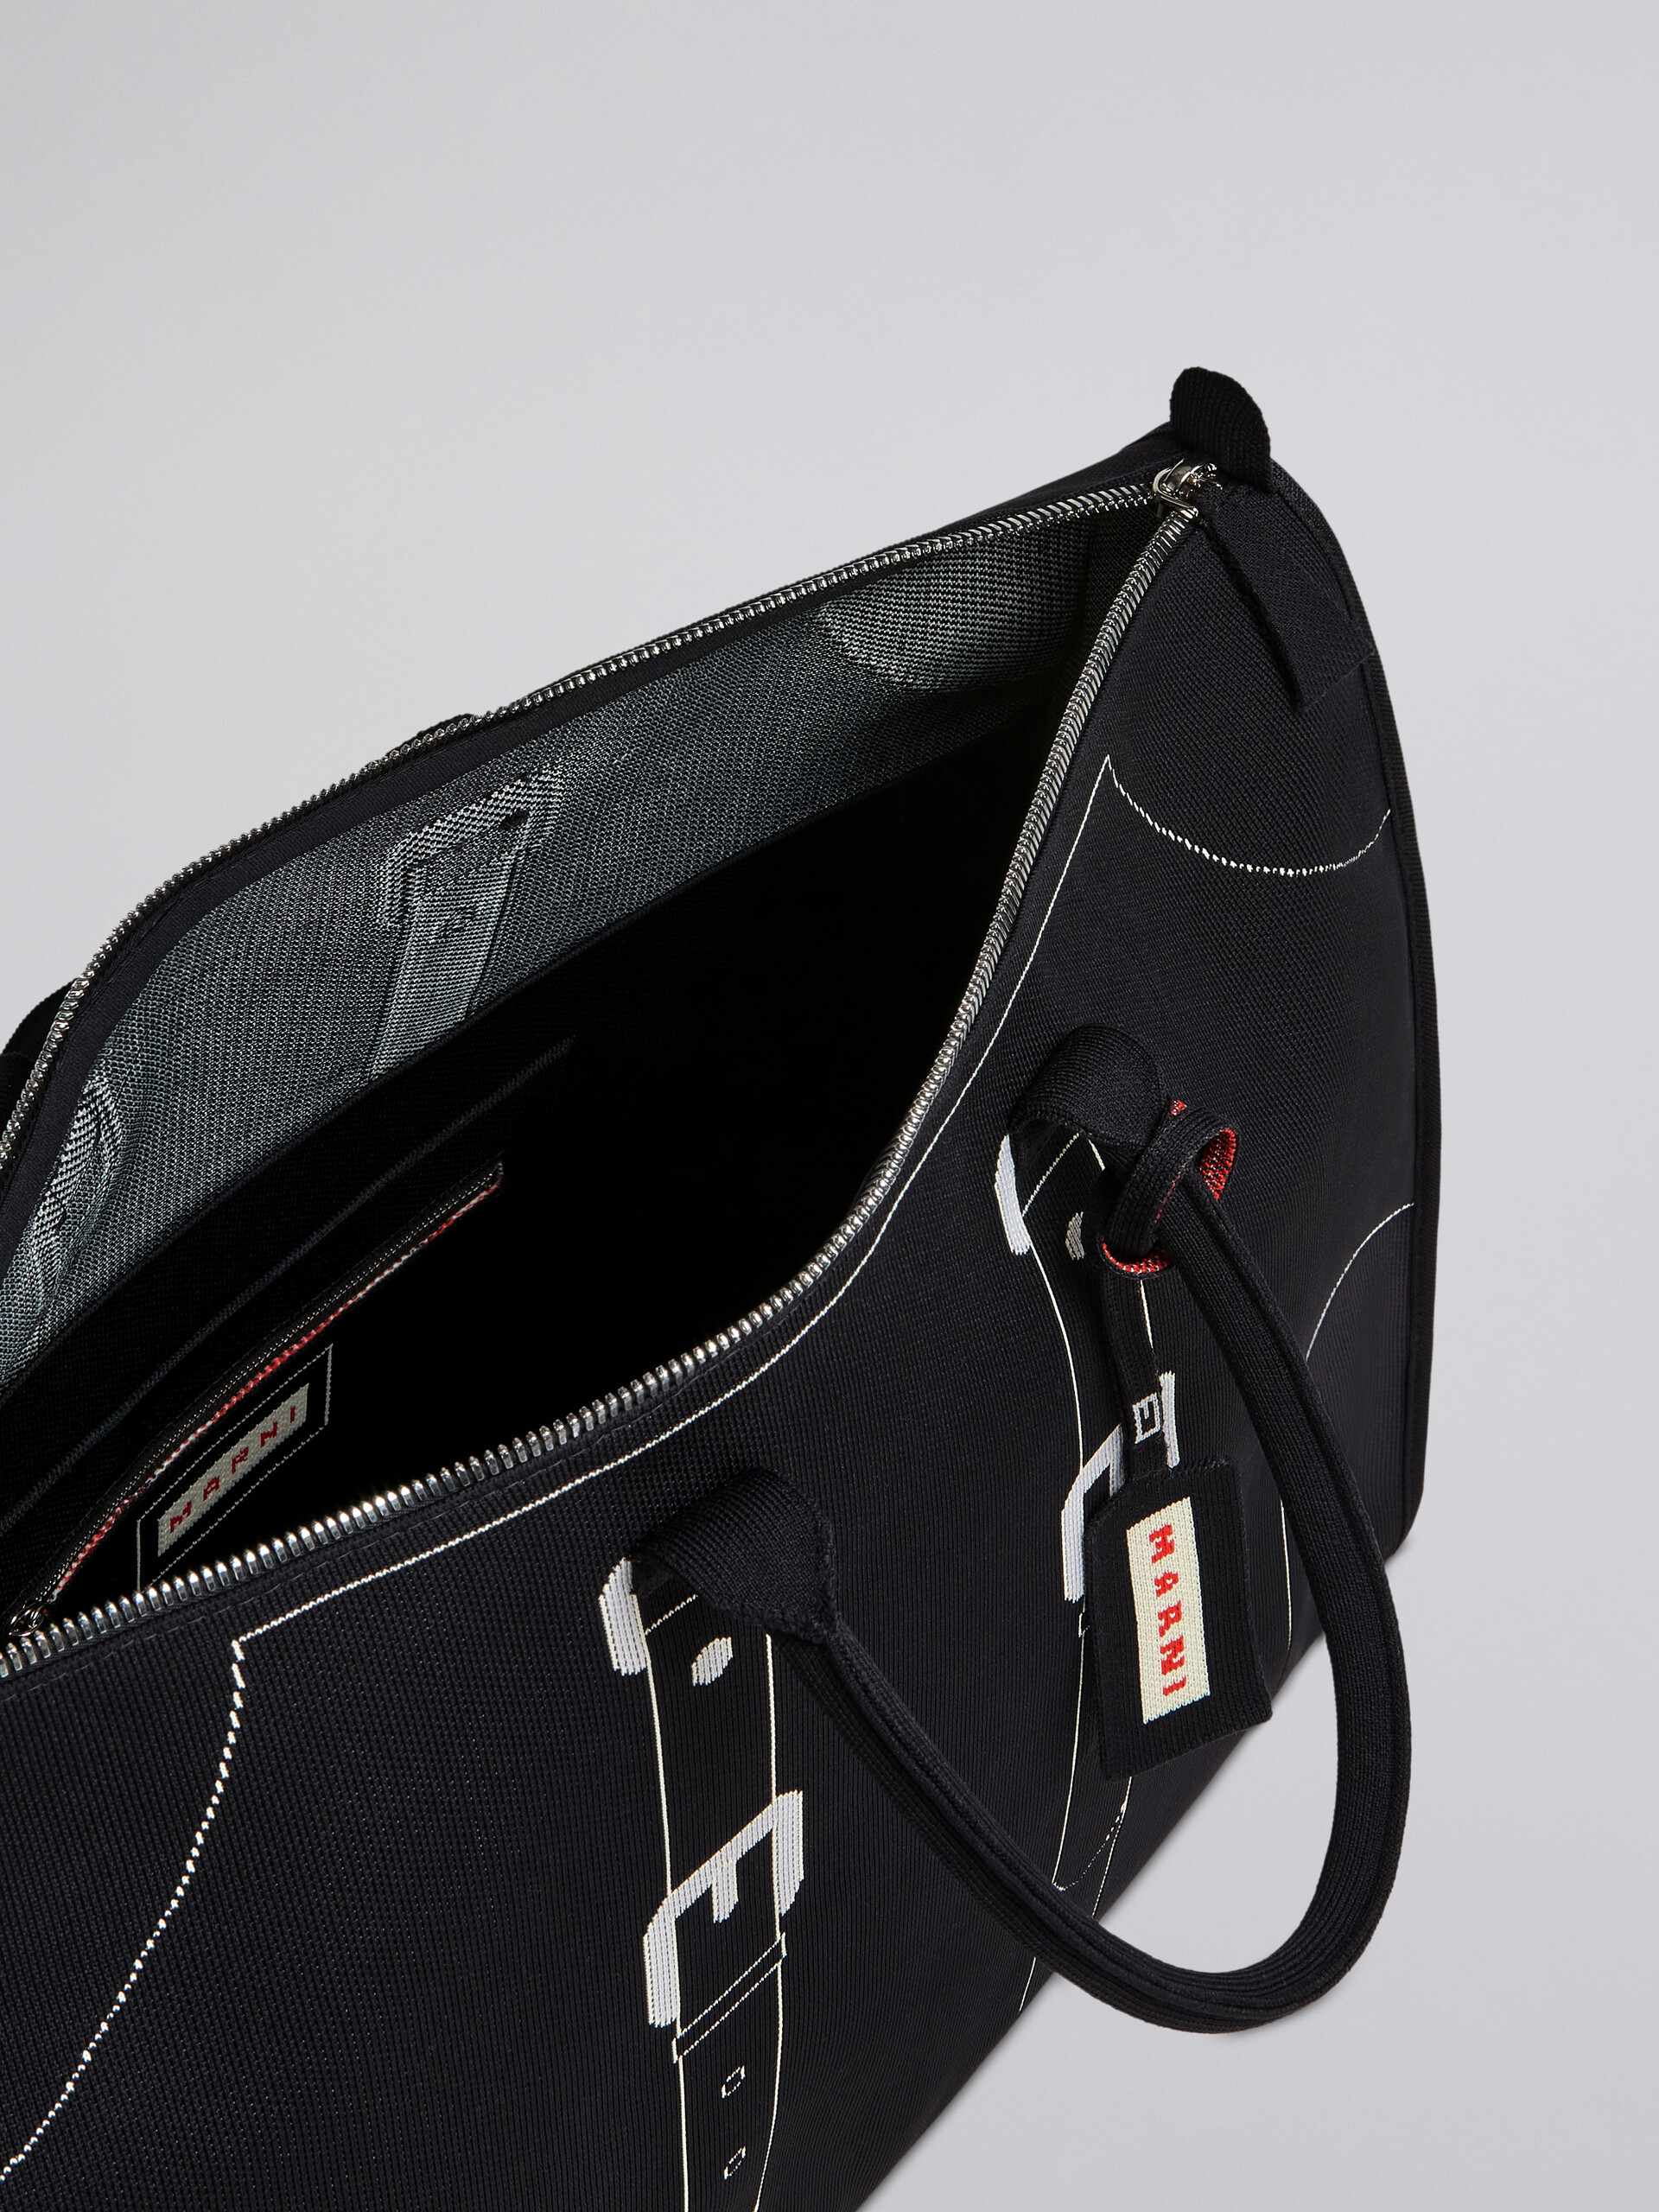 Black trompe-l'œil jacquard travel bag - Travelling Bag - Image 4